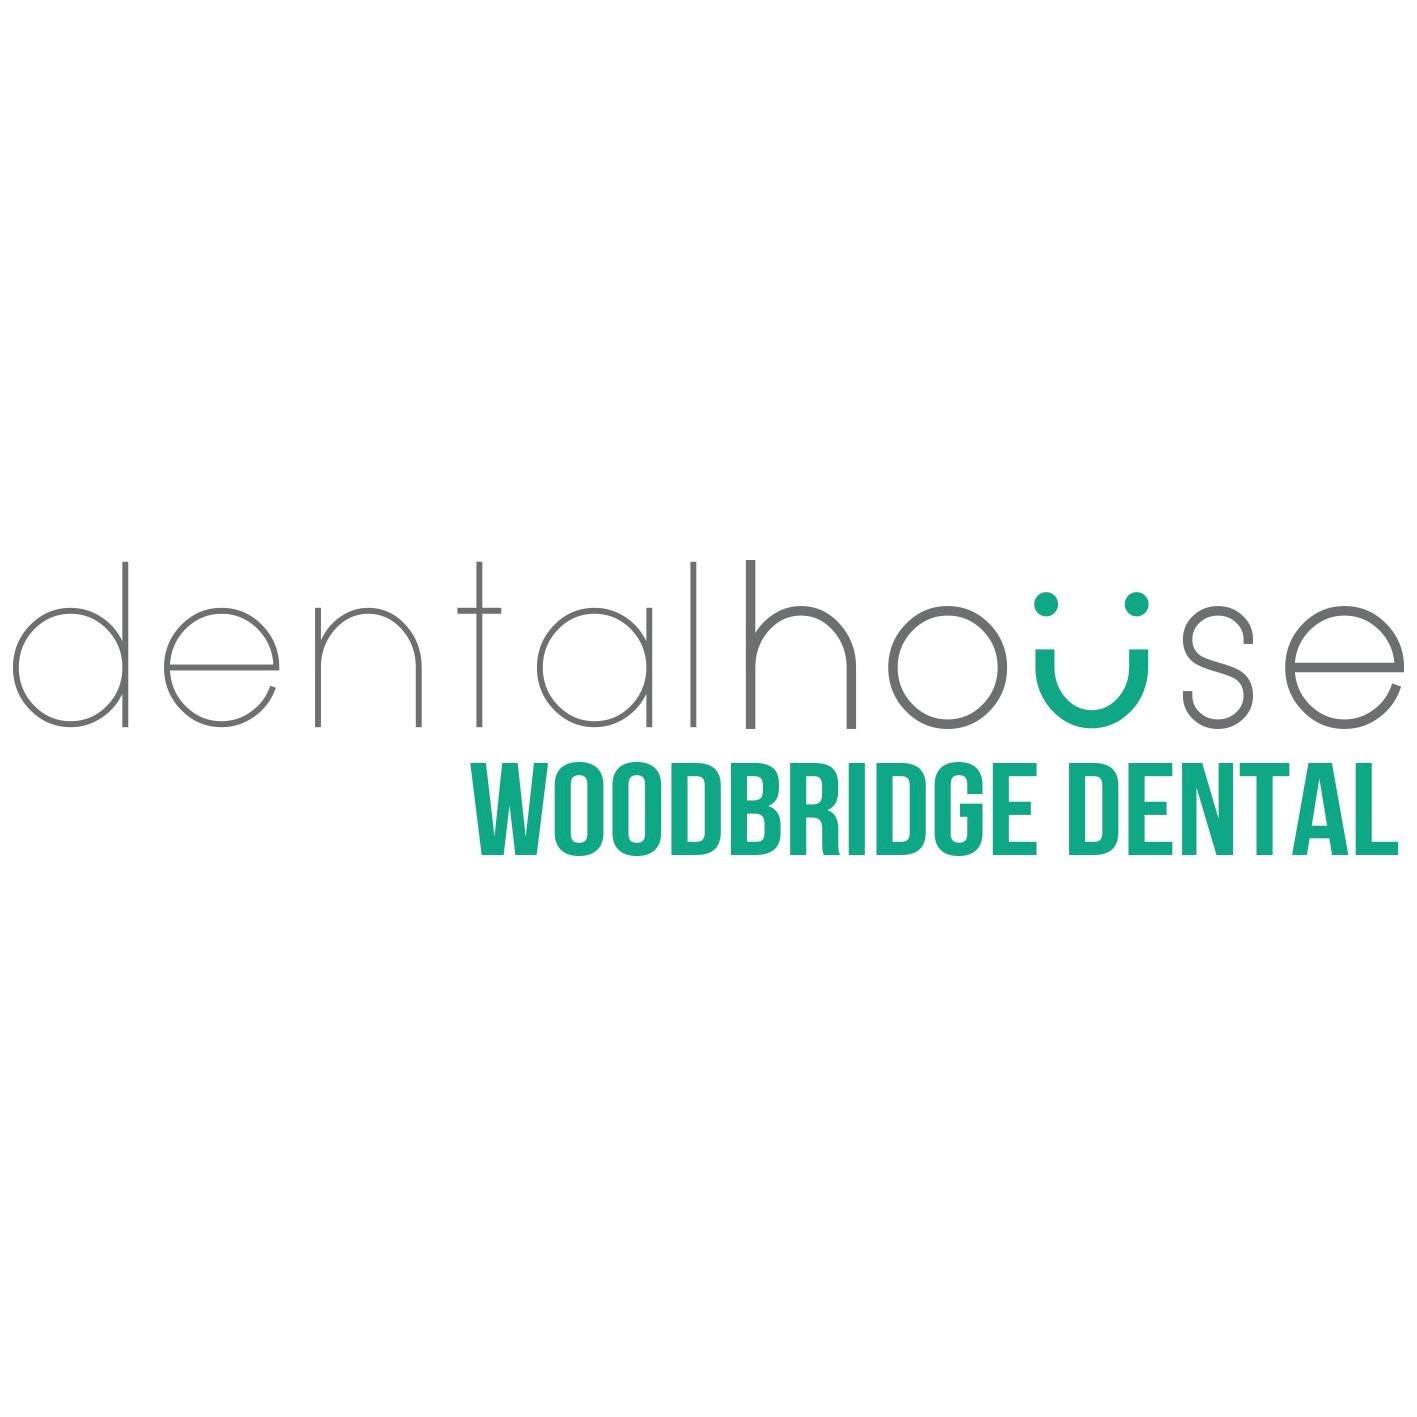 dentalhouse - Woodbridge Dental - Dentists